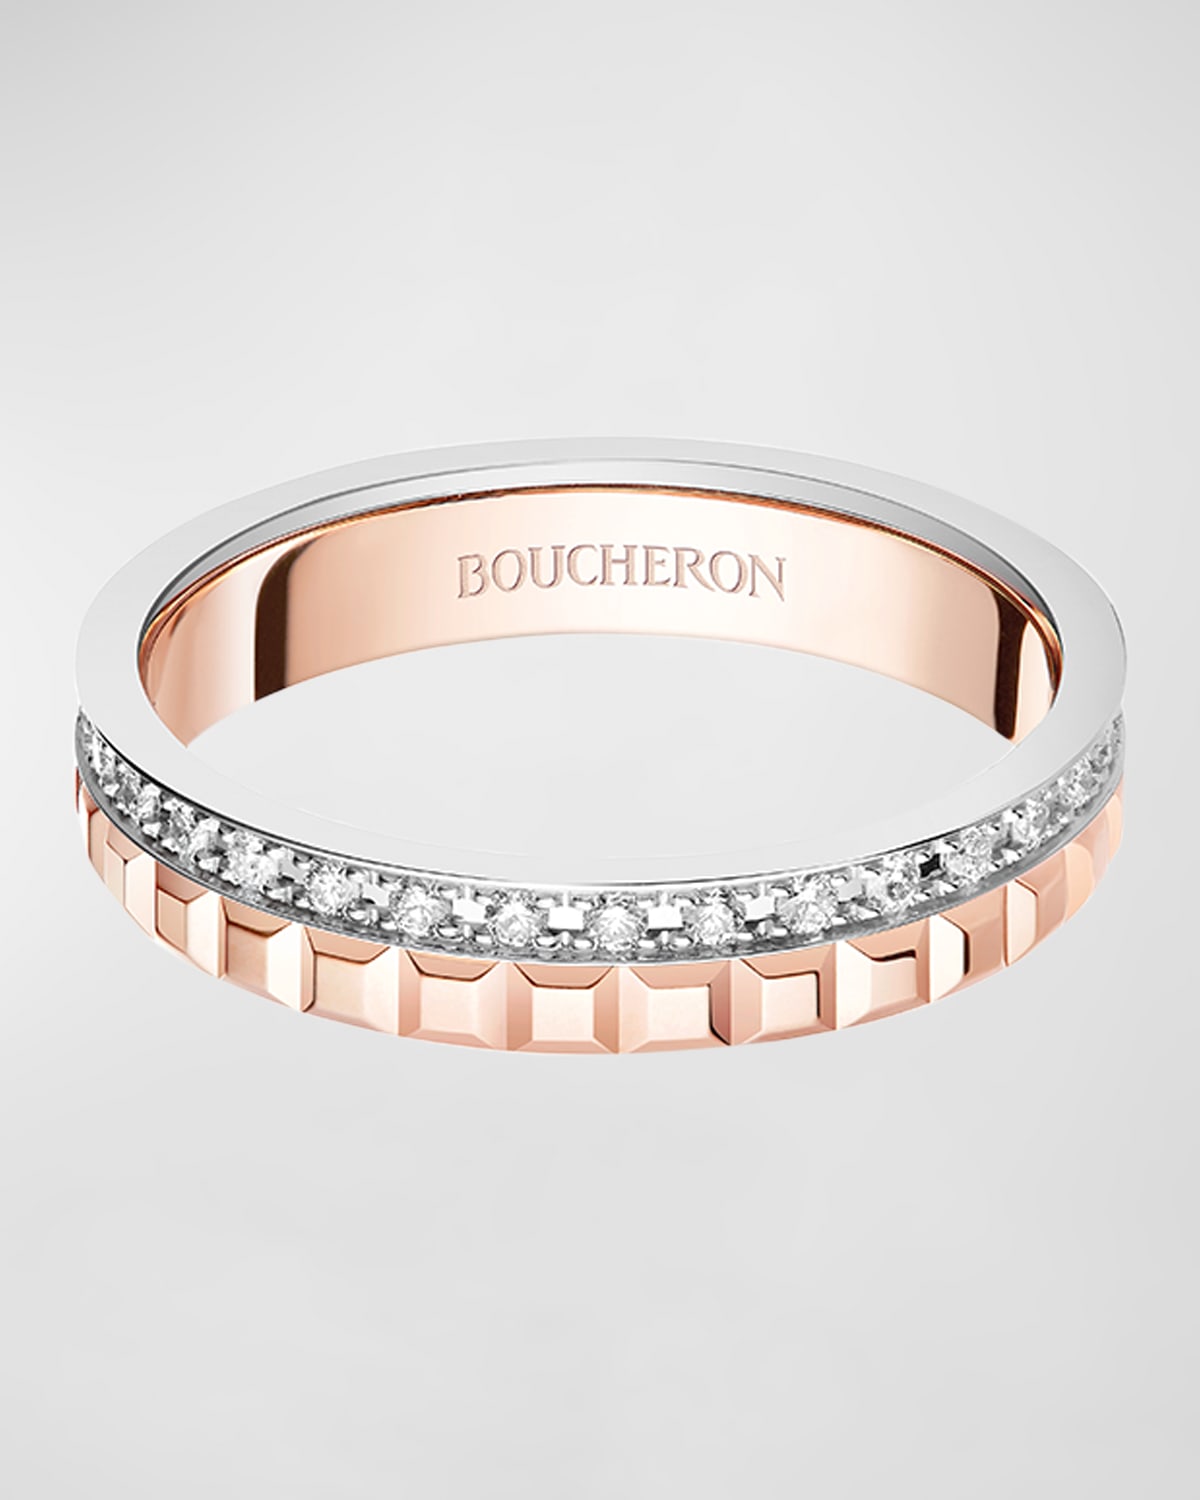 Boucheron Rose Gold and White Gold Quatre Diamond Ring, Size 52